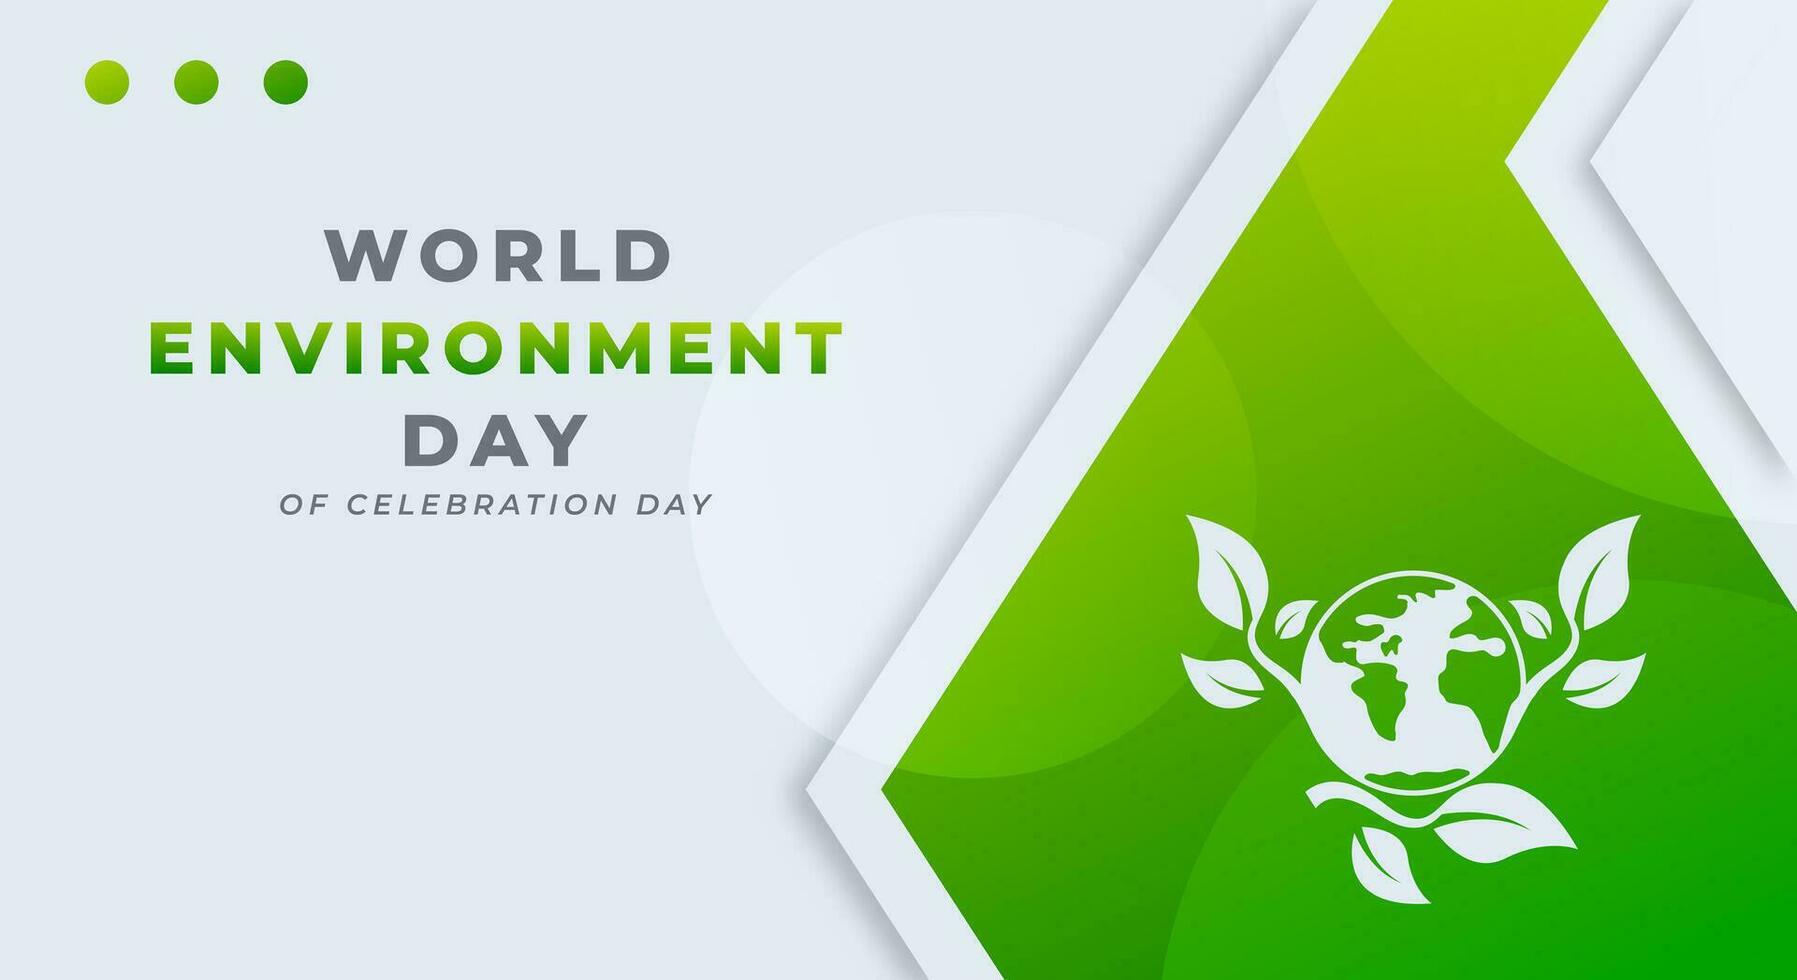 World Environment Day Celebration Vector Design Illustration for Background, Poster, Banner, Advertising, Greeting Card